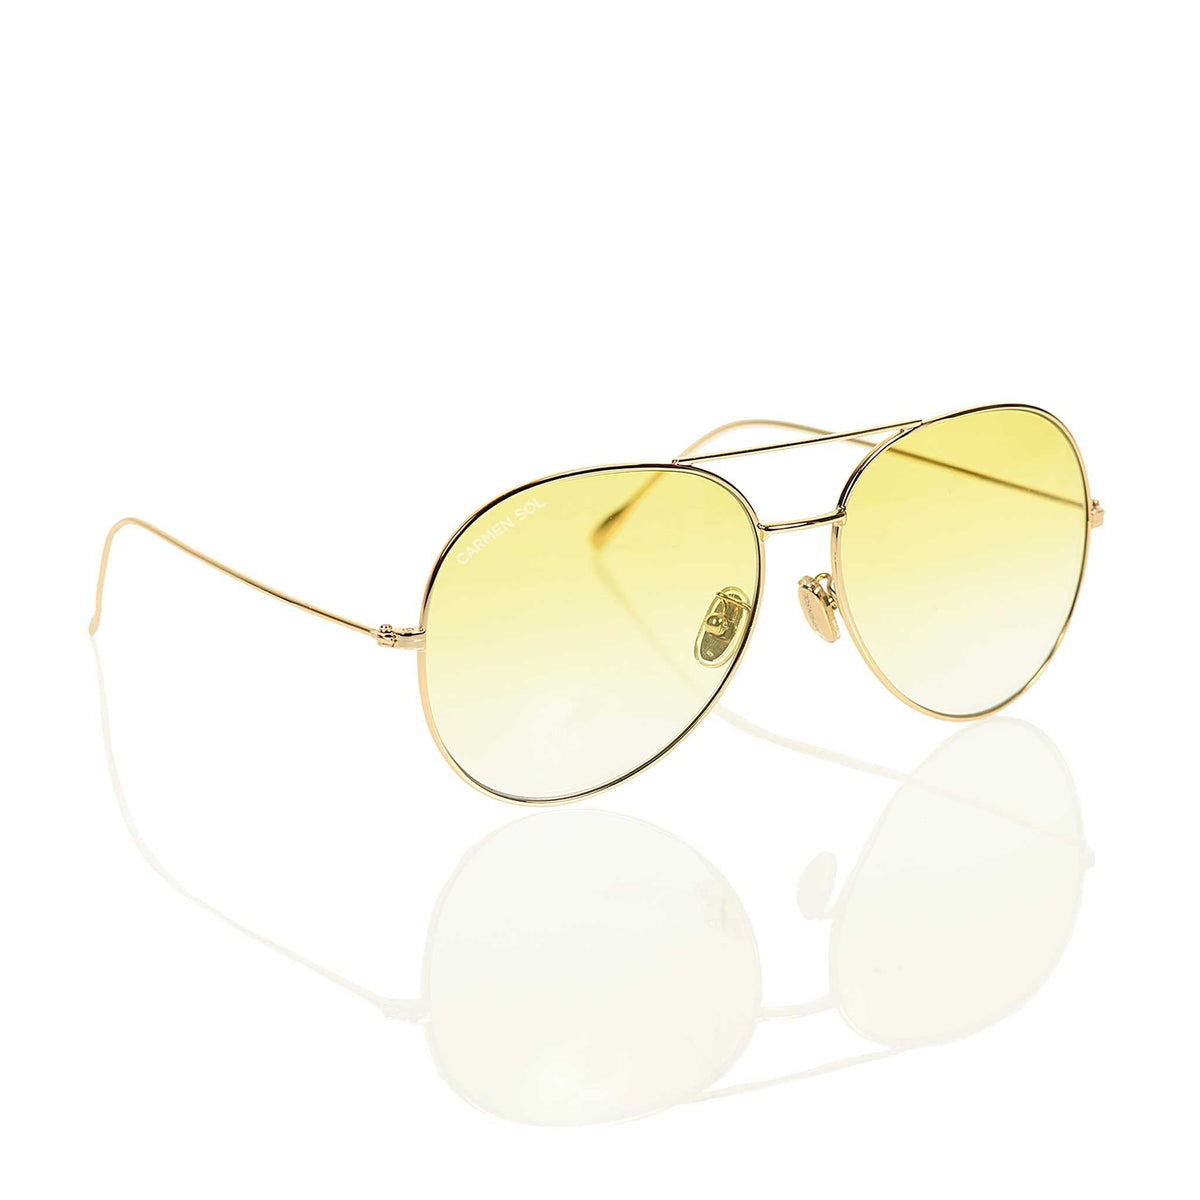 Gold aviator sunglasses for women and gradient lenses